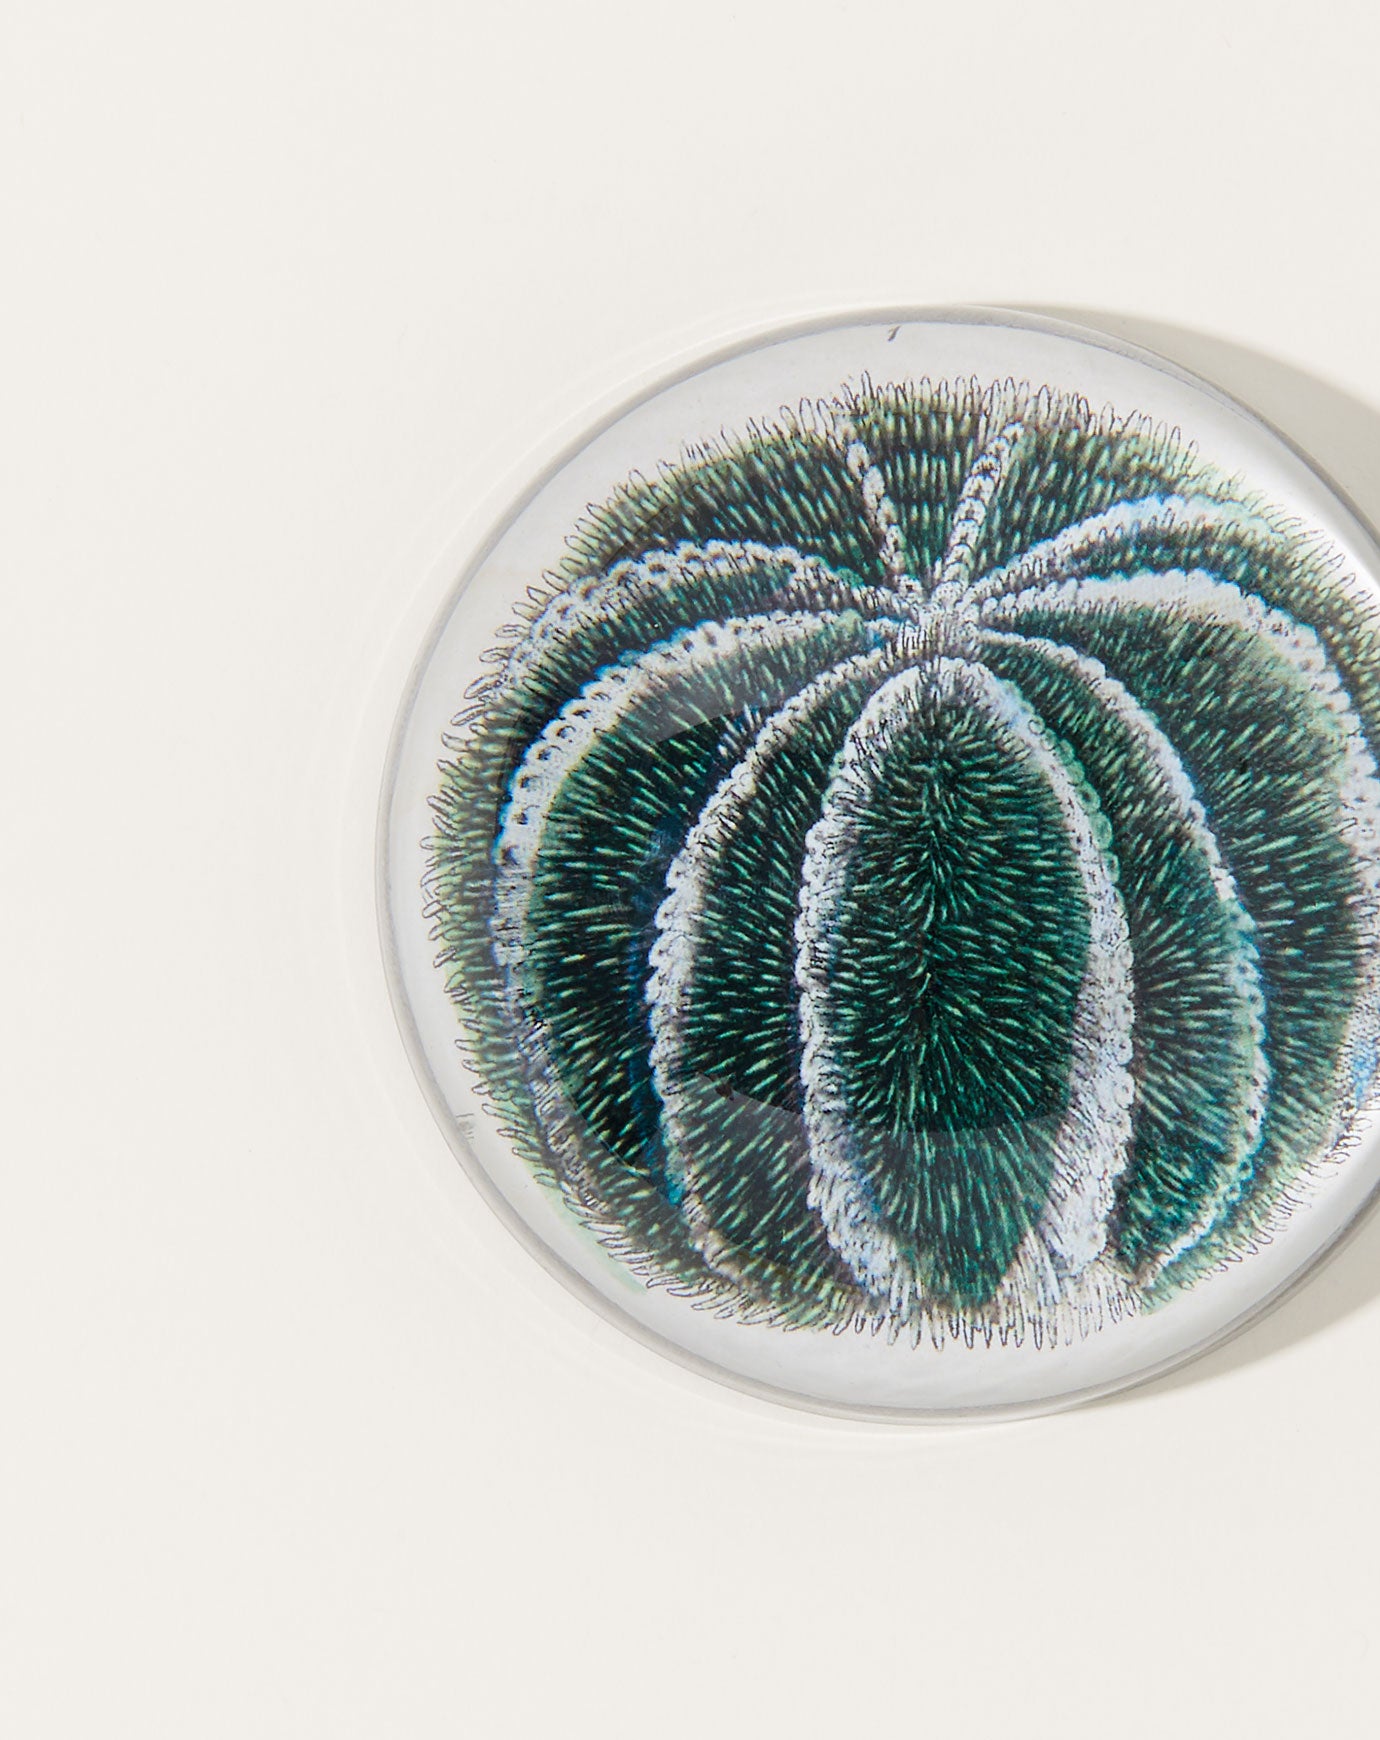 John Derian Blue Sea Urchin Dome Paperweight